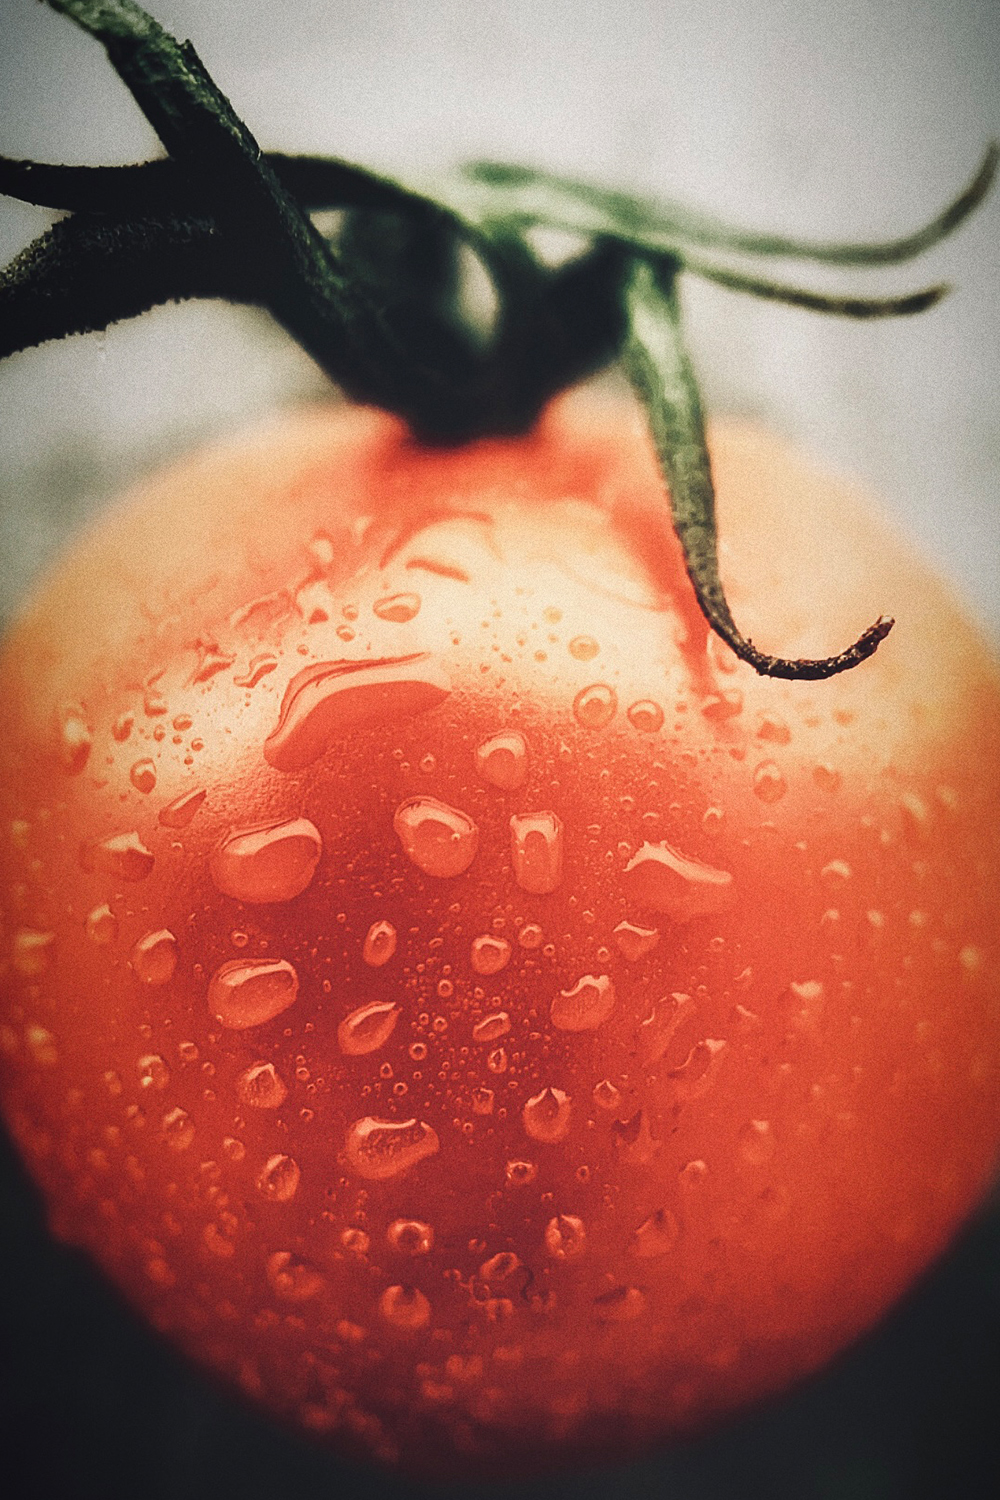 up close image of a tomato